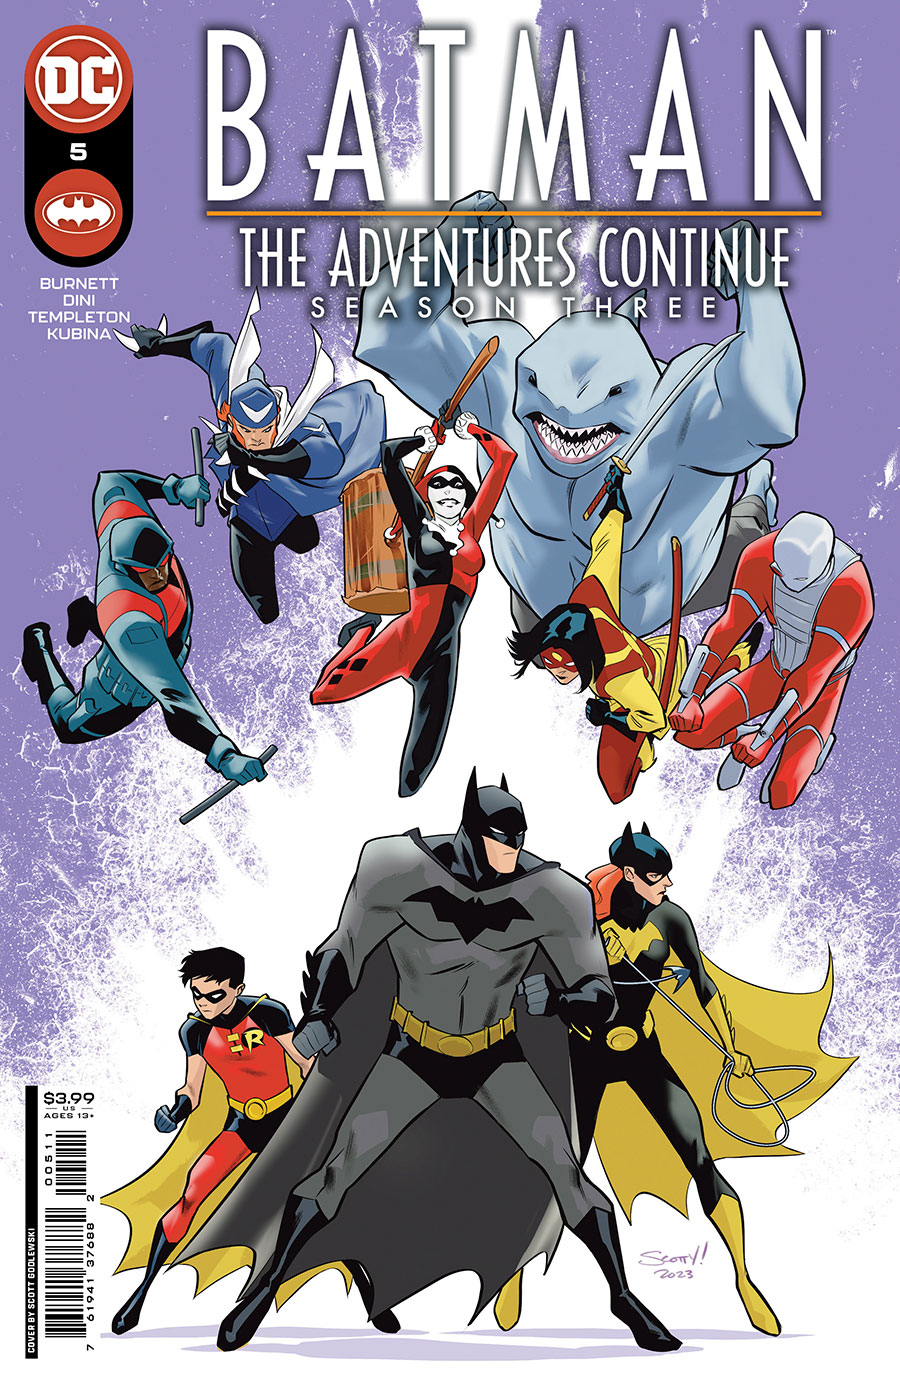 Batman The Adventures Continue Season III #5 Cover A Regular Scott Godlewski Cover